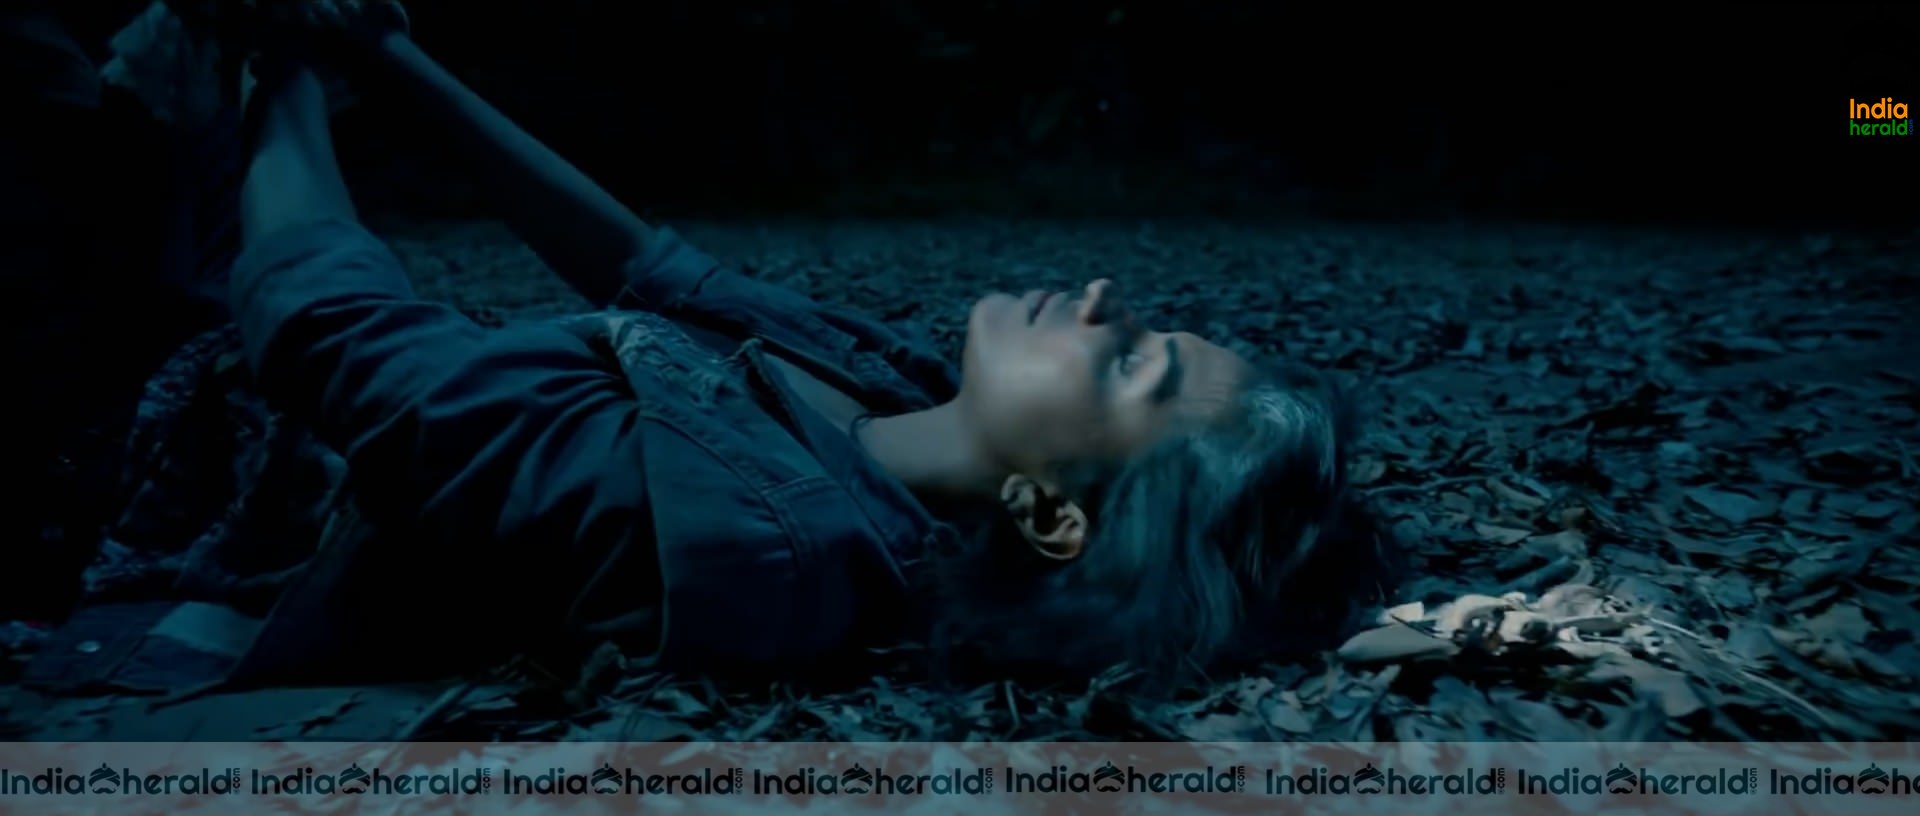 Amala Paul Hot in Adho Andha Paravai Pola Teaser HD Stills Set 2